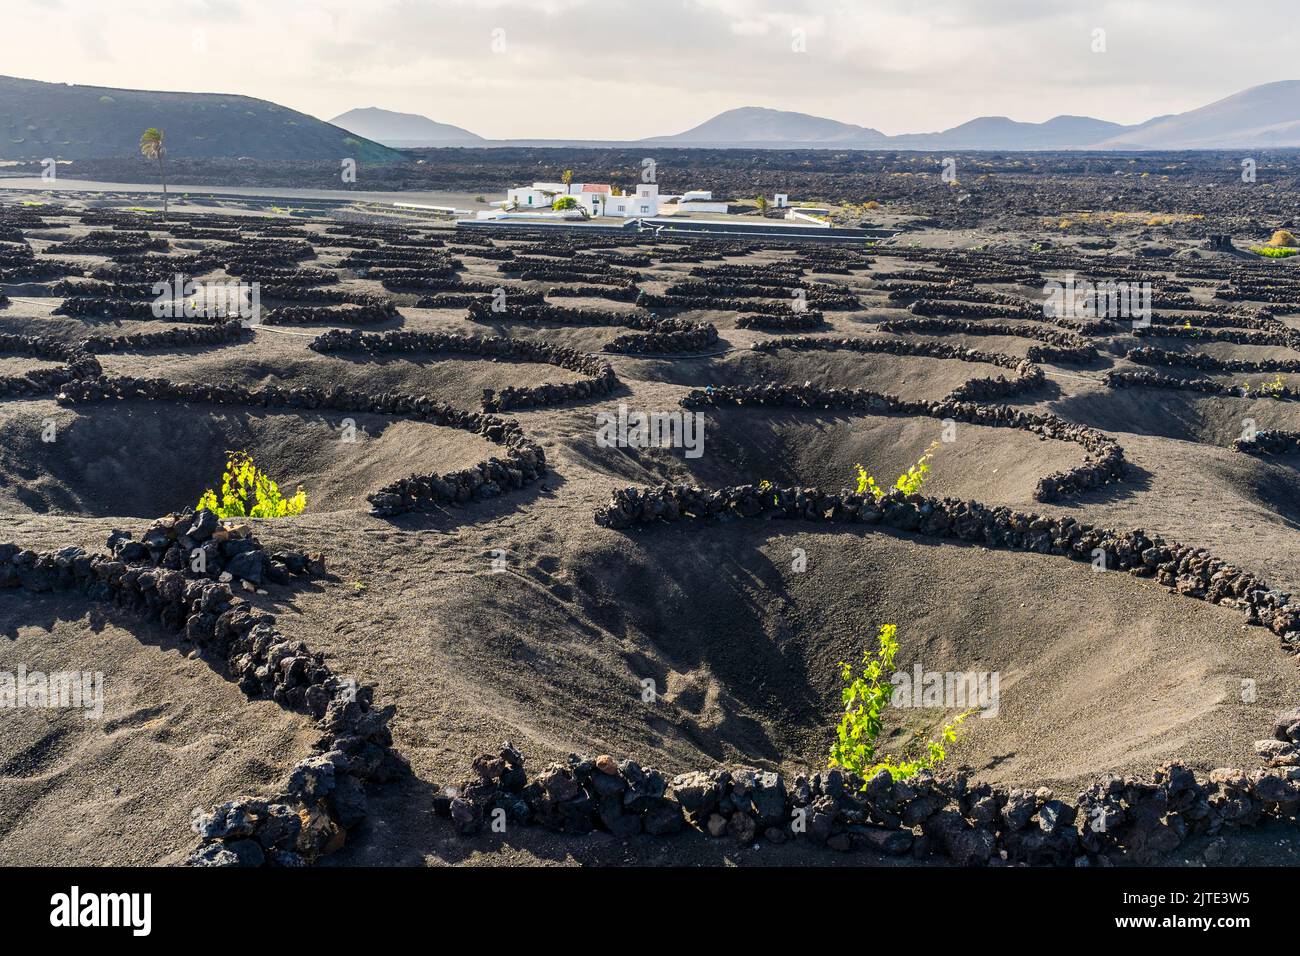 Grapevine on black volcanic soil in vineyards of La Geria, Lanzarote, Canary Islands, Spain Stock Photo